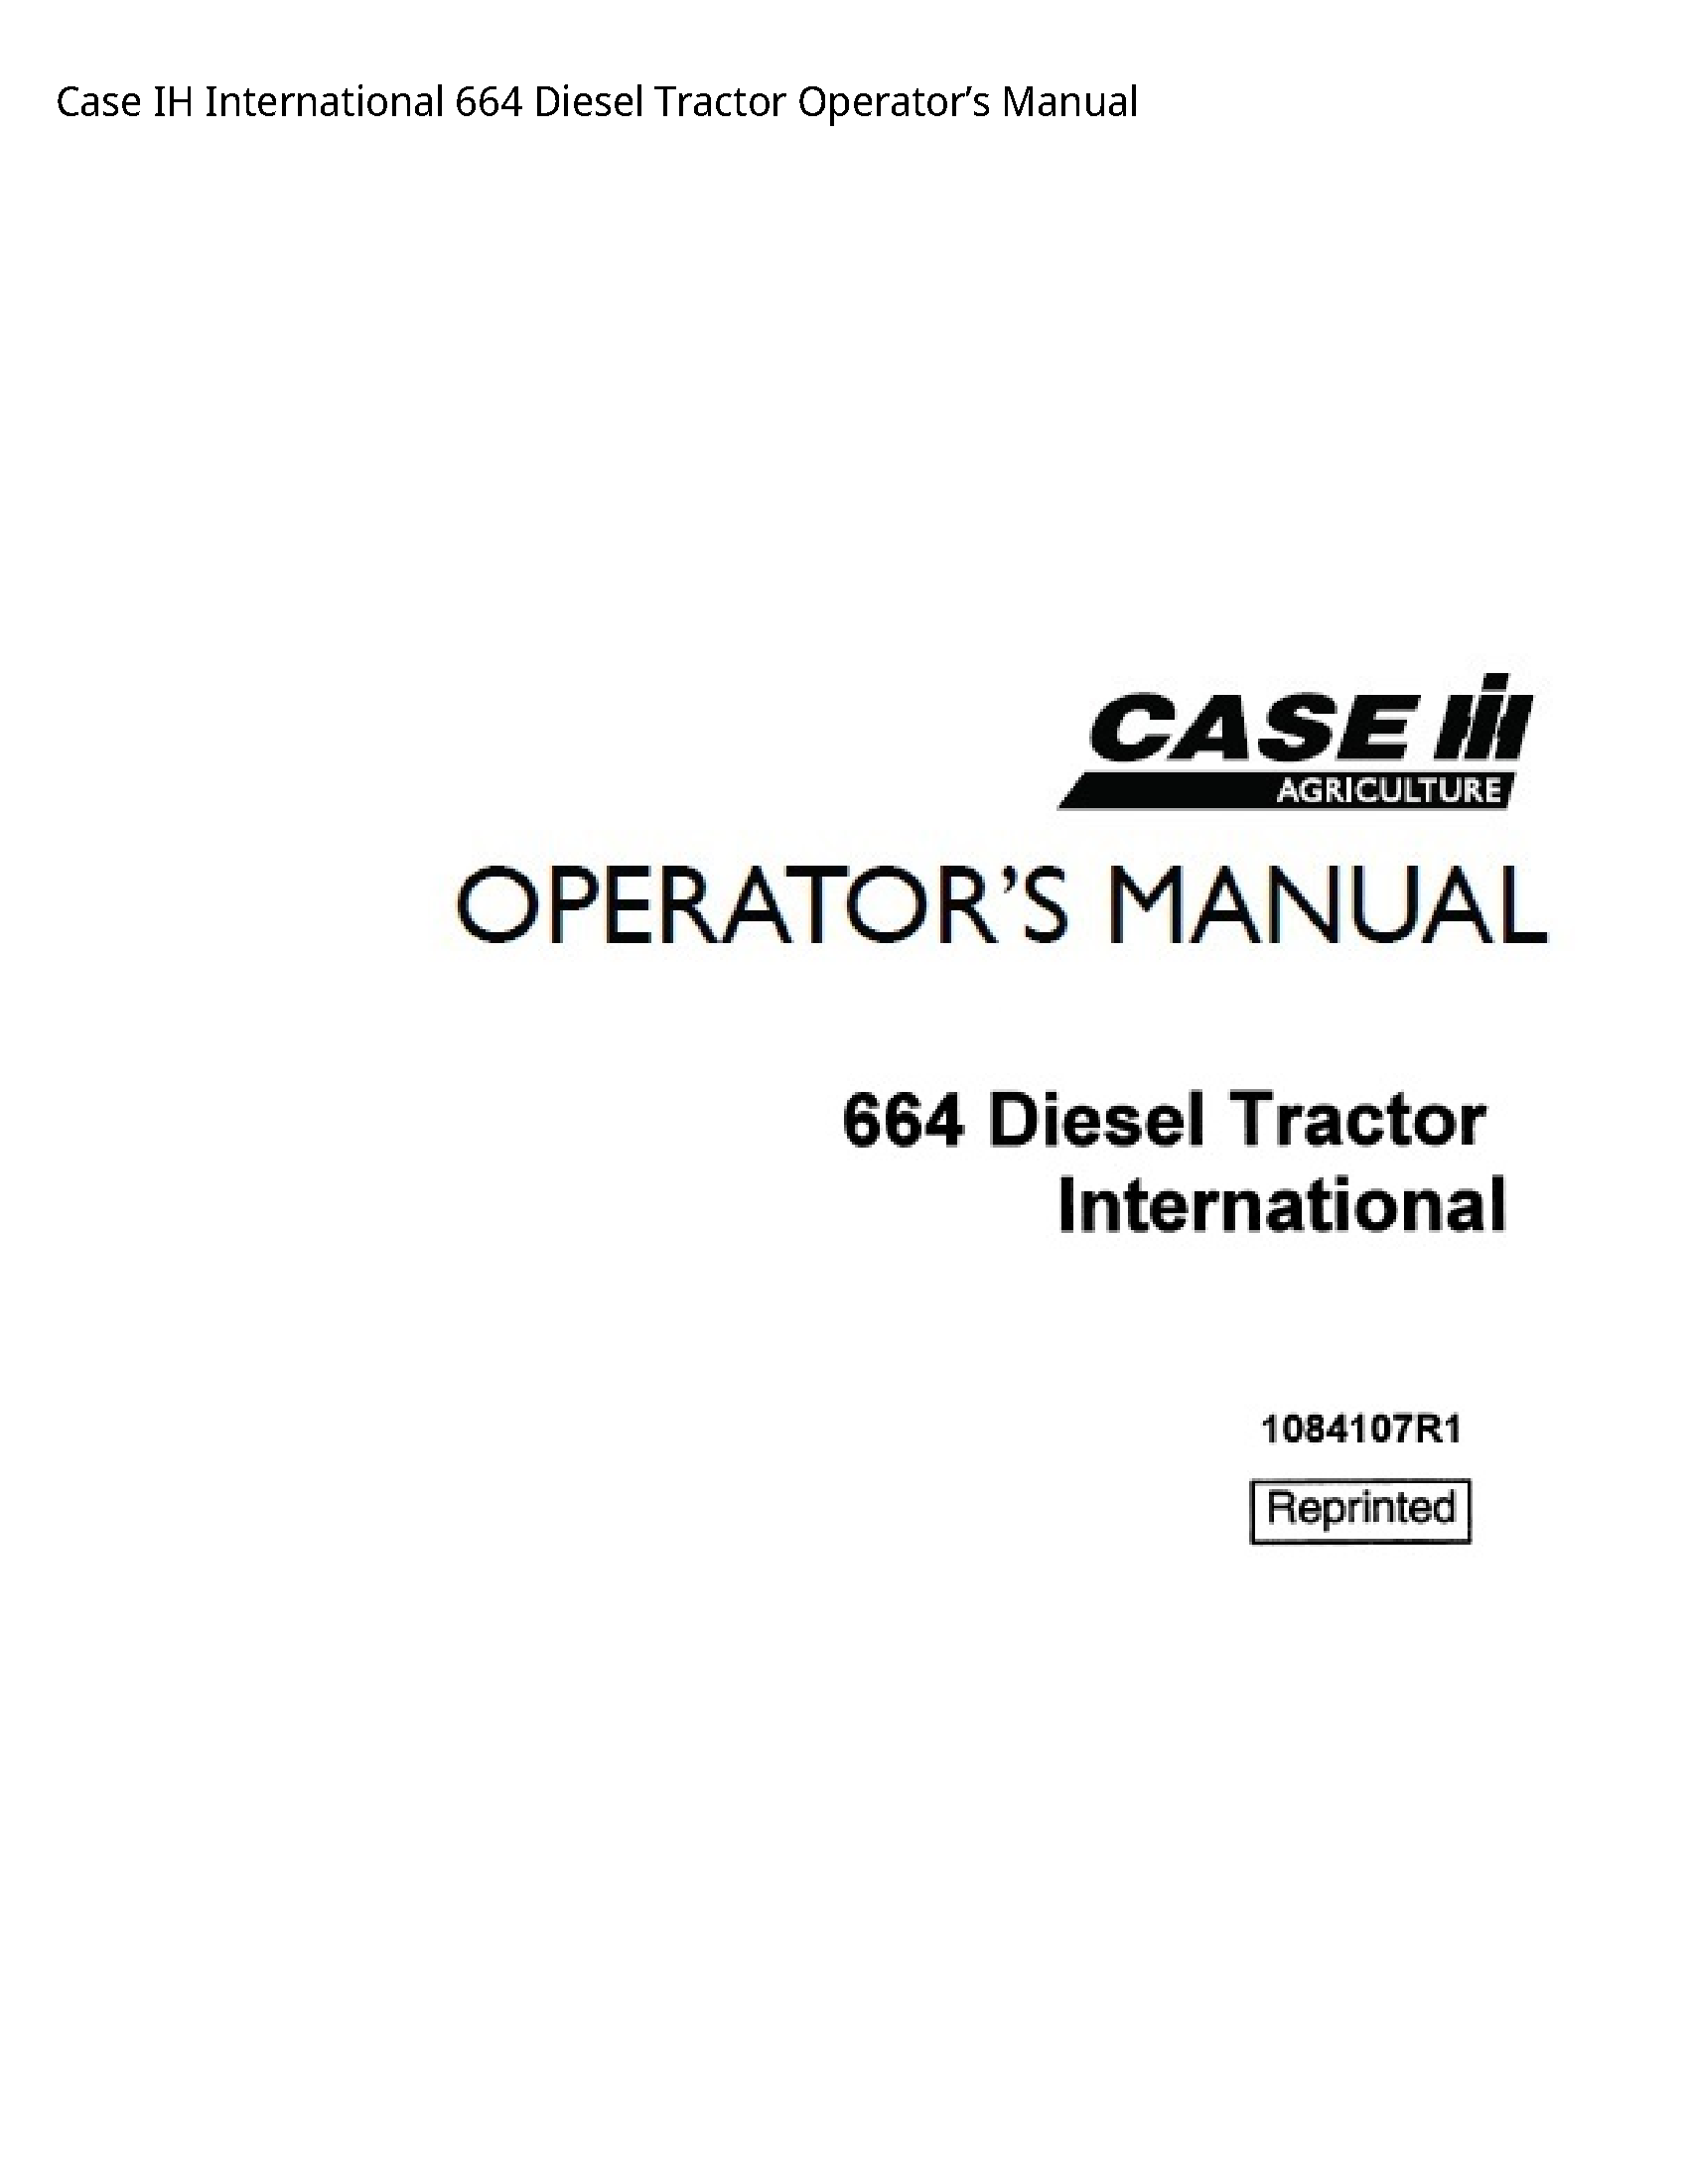 Case/Case IH 664 IH International Diesel Tractor Operator’s manual